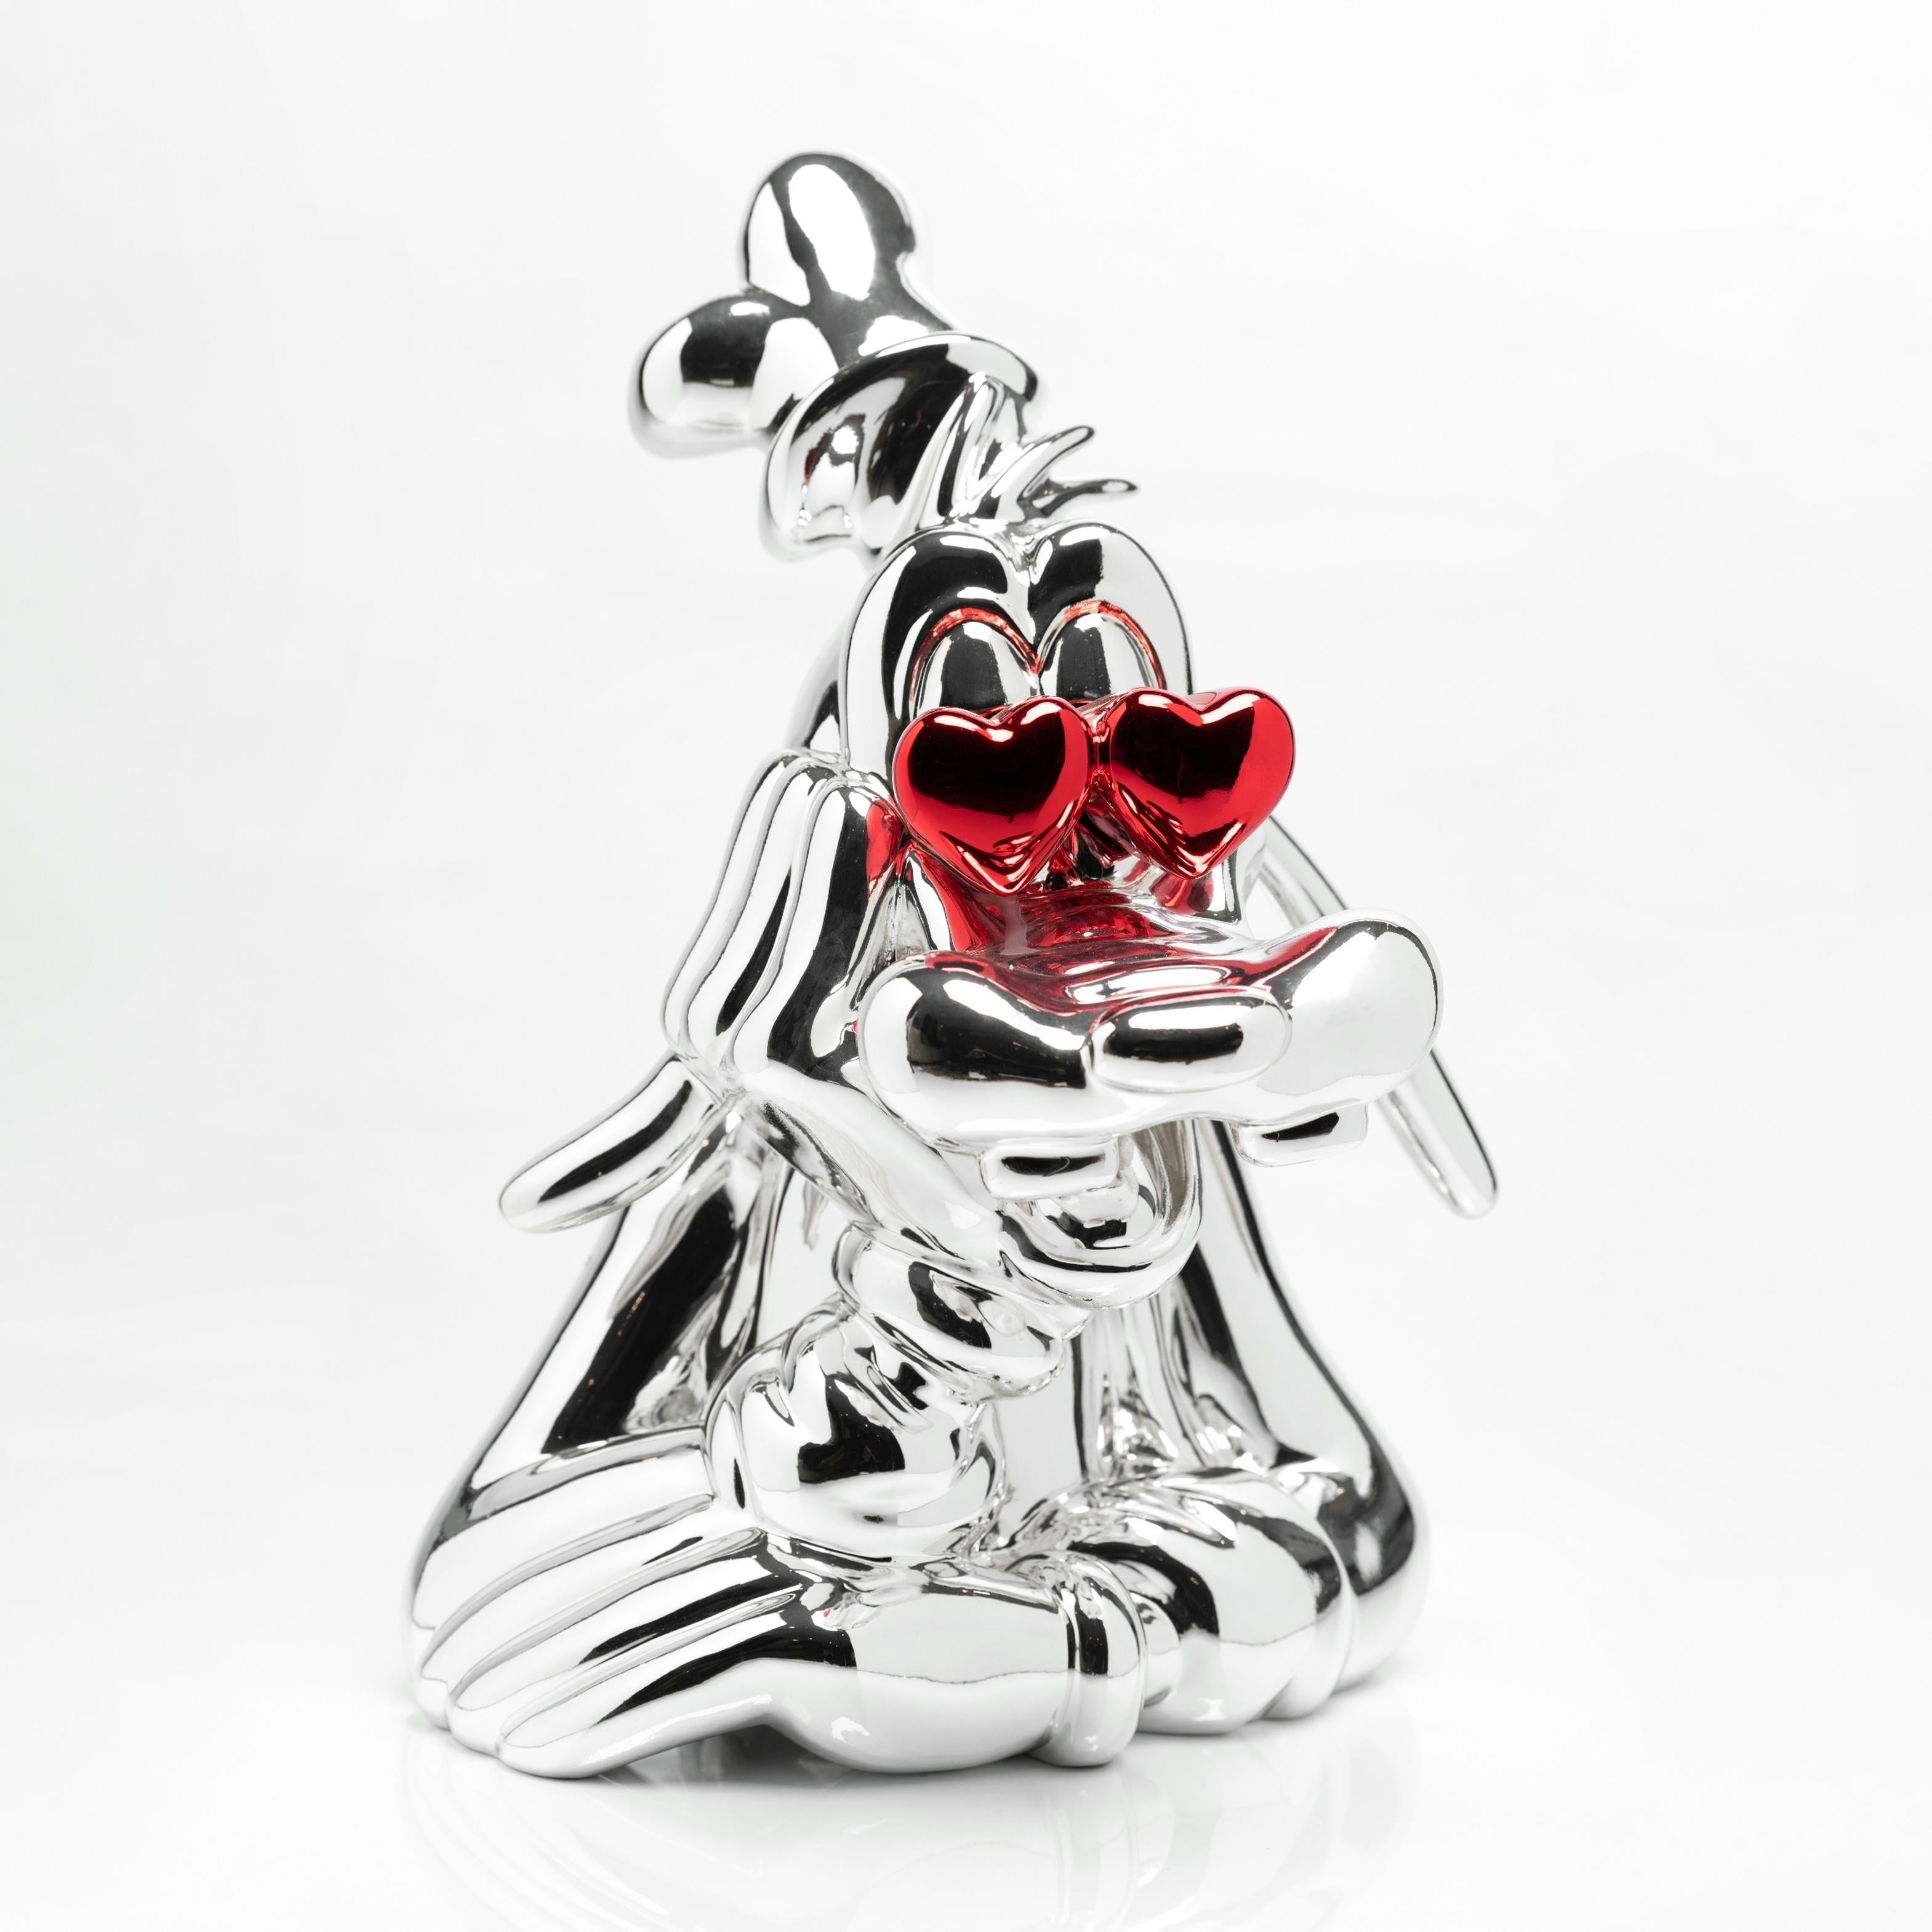 Goofy In Love-original Disney sculpture réaliste moderne-œuvre d'art contemporaine - Contemporain Sculpture par Sanuj Birla